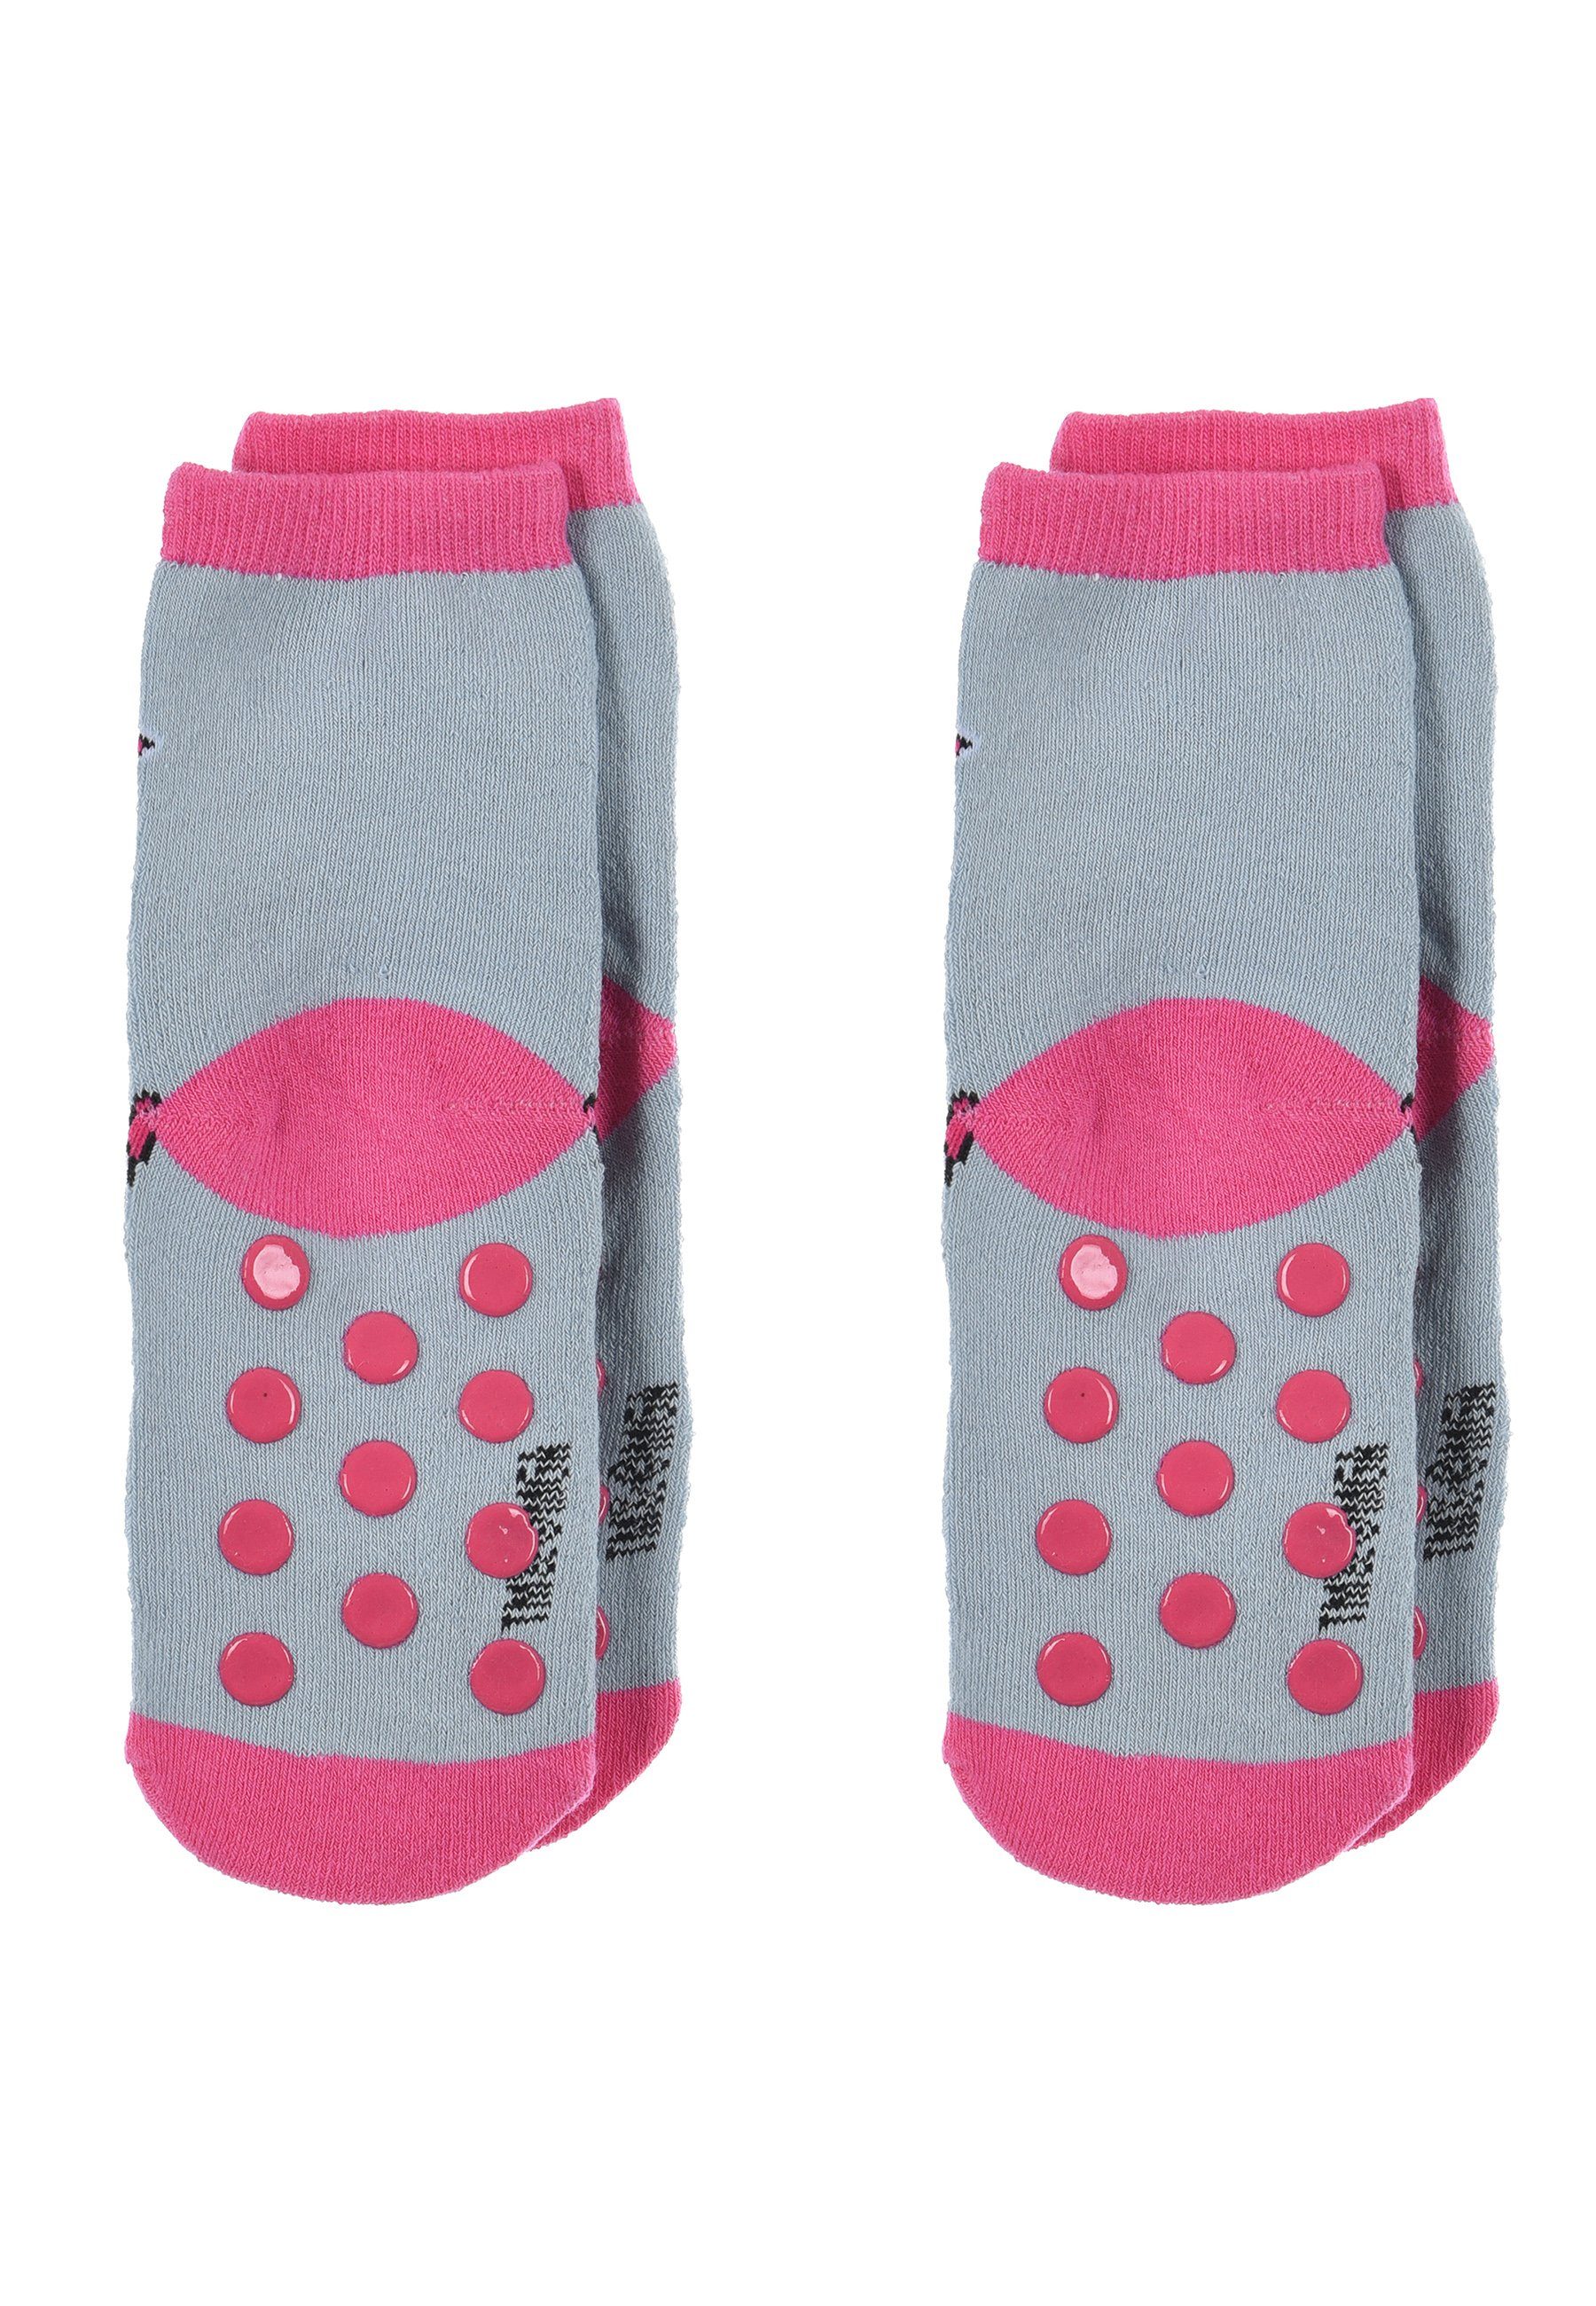 L.O.L. Kinder ABS-Socken Noppen Socken 2 (2-Paar) Strümpfe SURPRISE! anti-rutsch mit Gumminoppen Mädchen Paar Stopper-Socken